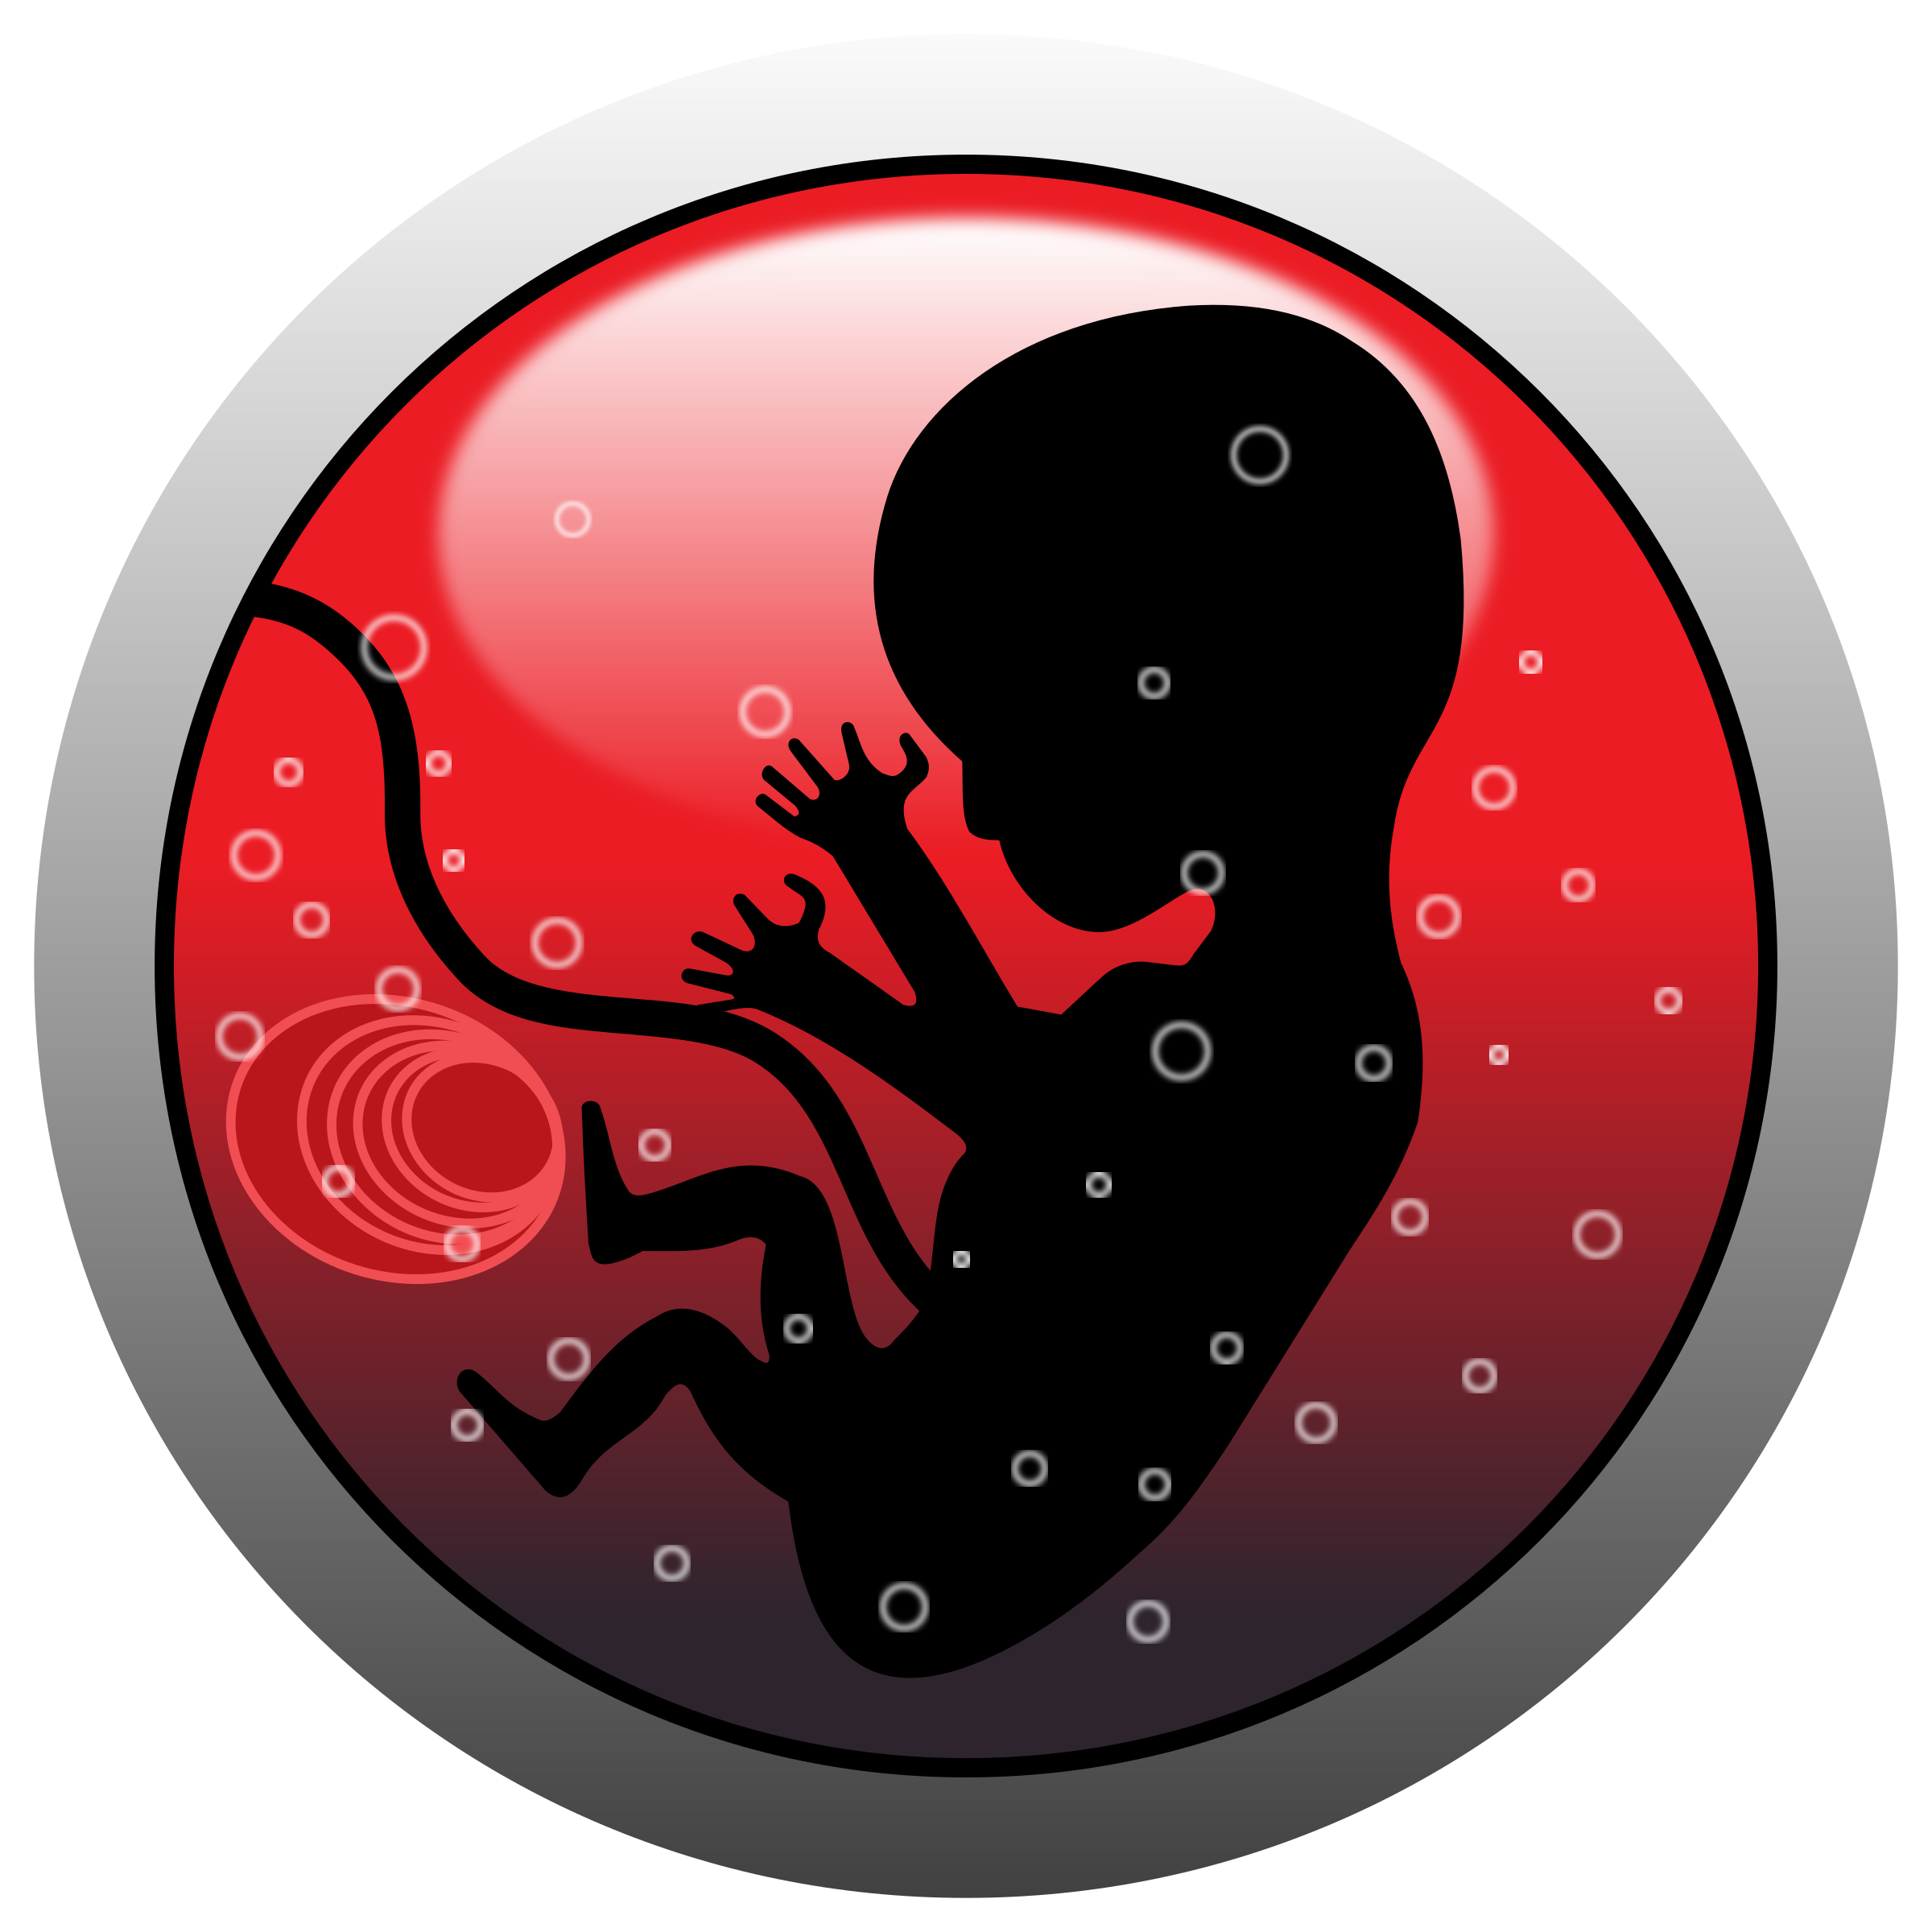 Human embryo (silhouette) SVG Clip arts